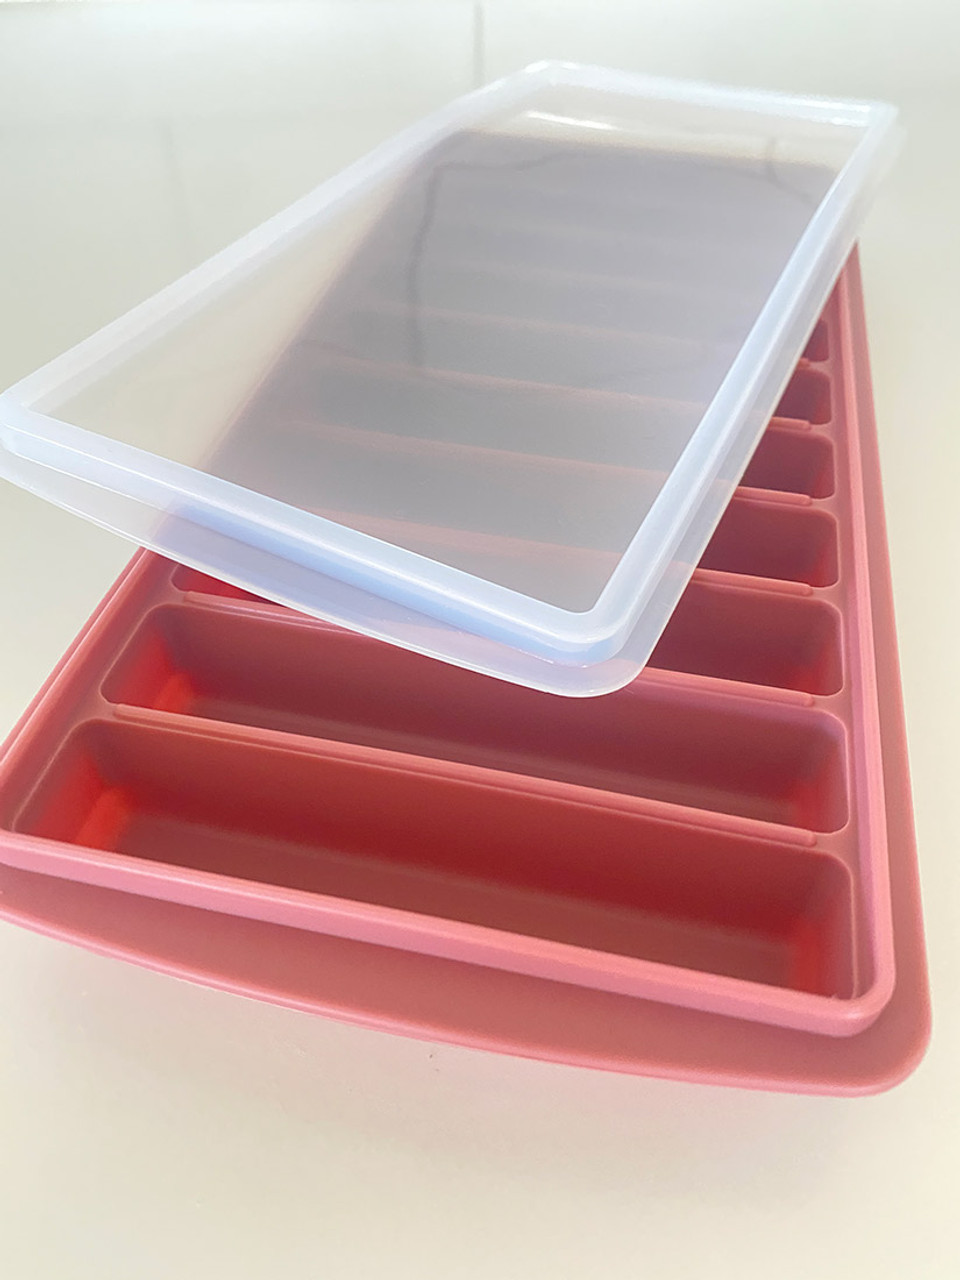 Breastmates Milk Sticks - Reusable Freezer Trays for breast milk